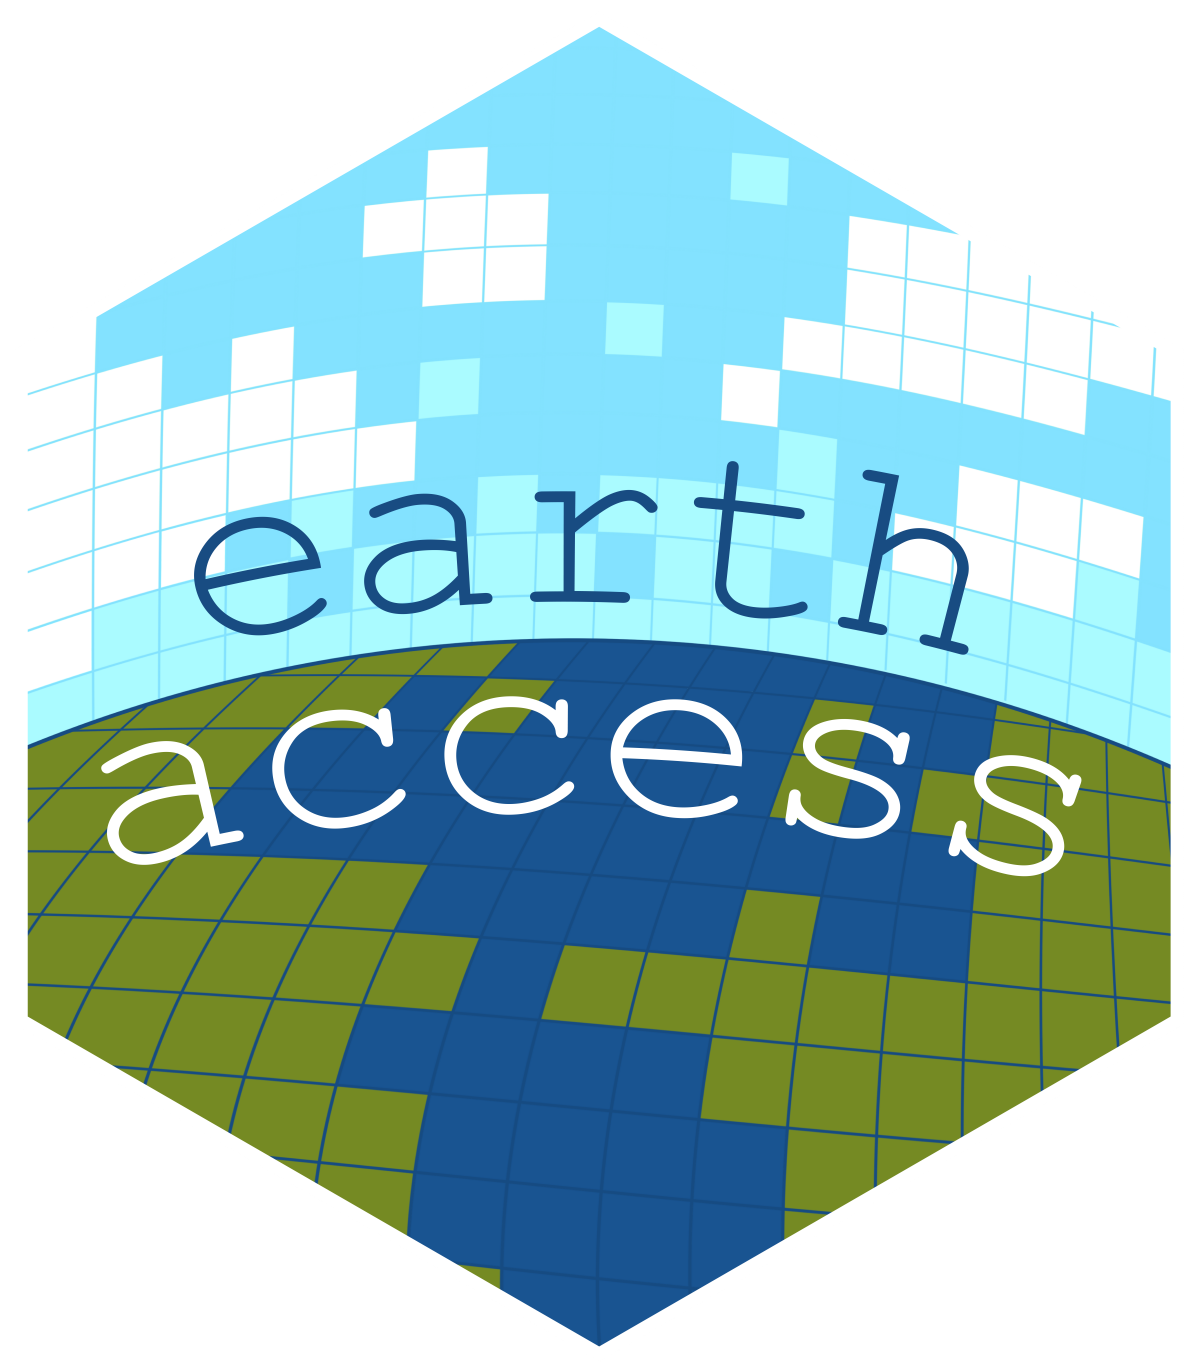 hexagonal logo says earth access